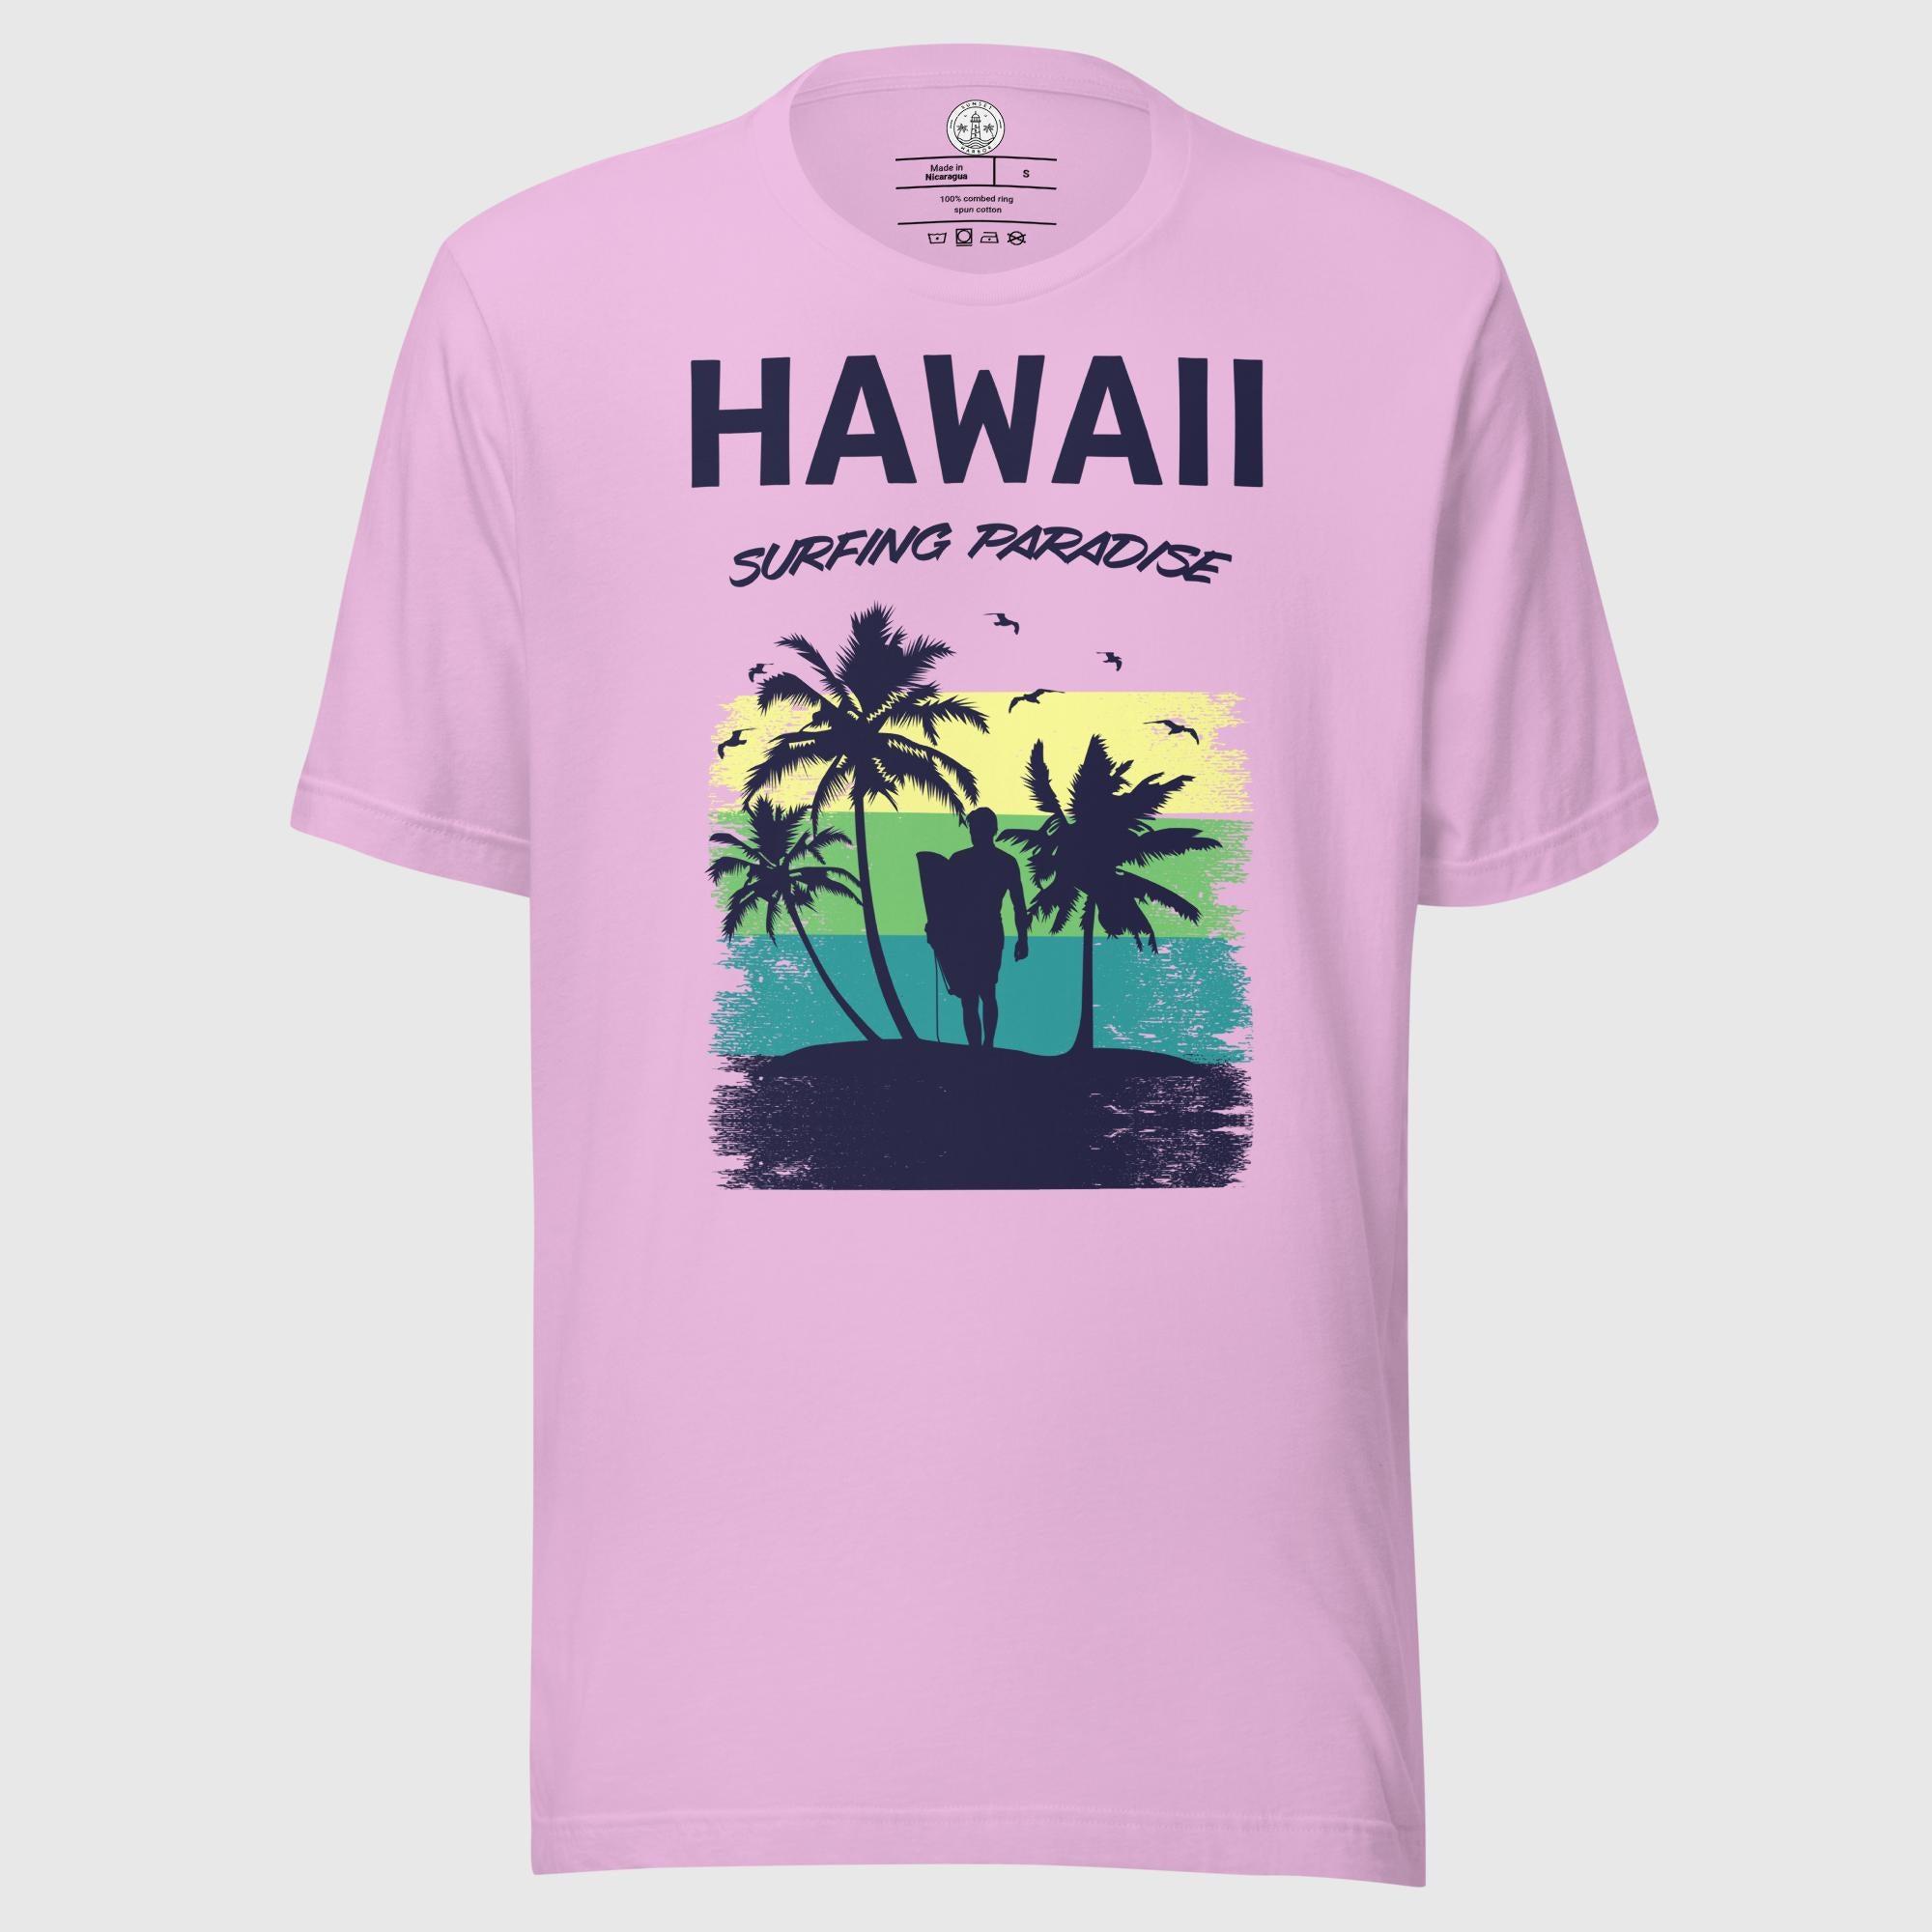 Unisex t-shirt - Hawaii